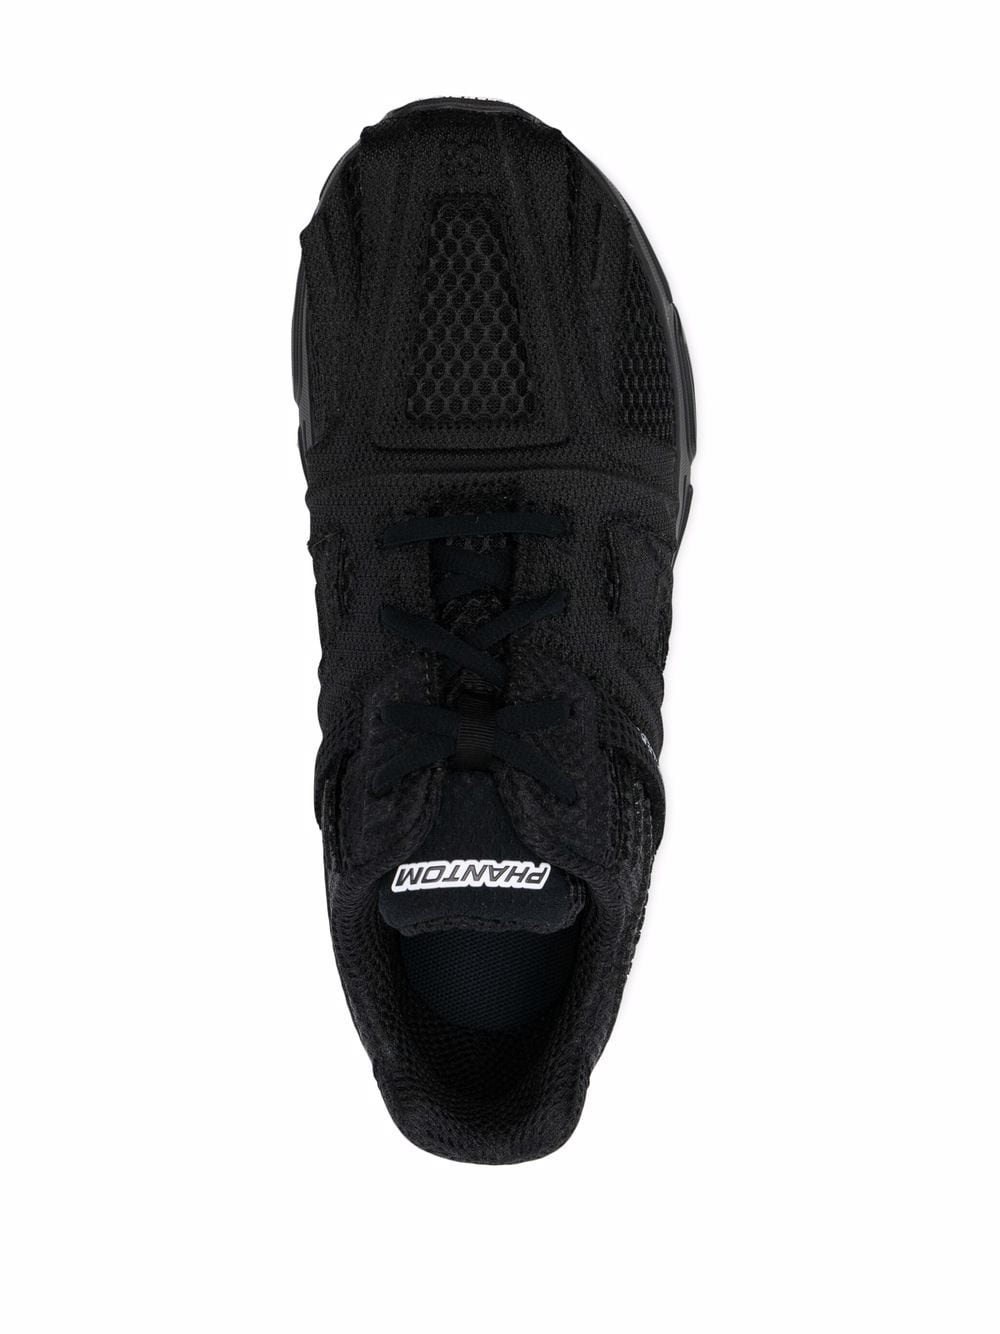 Black Low-Top Sneaker for Women by Balenciaga